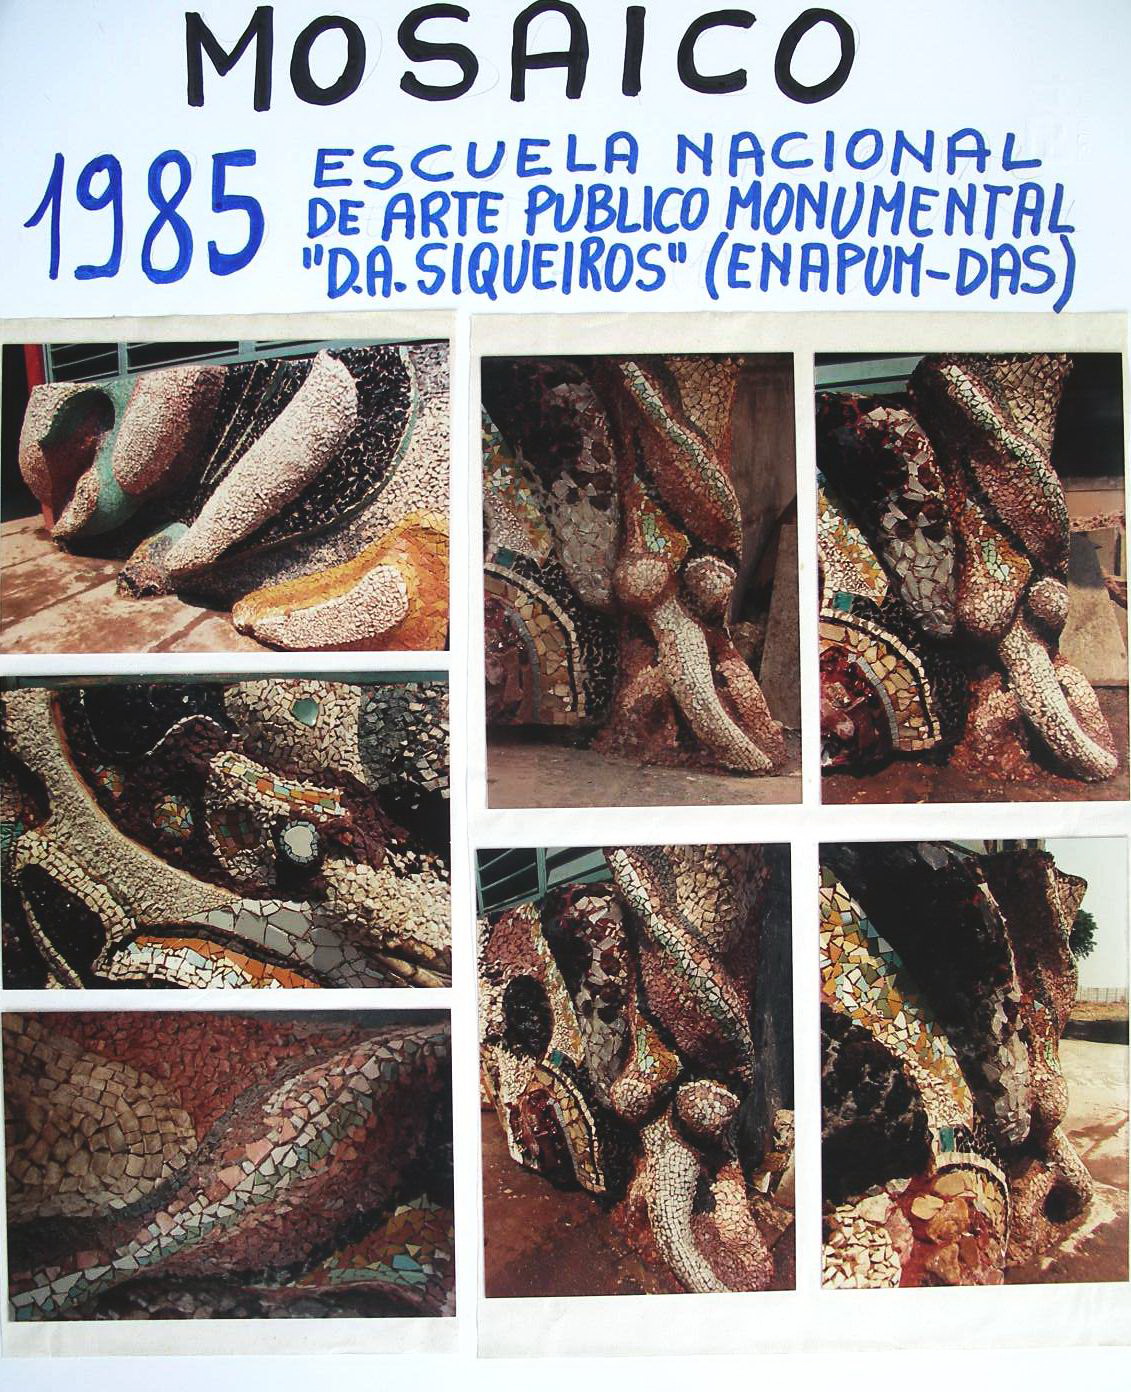 6 - 1985-2 Mosaico nella ENAPUM-DAS